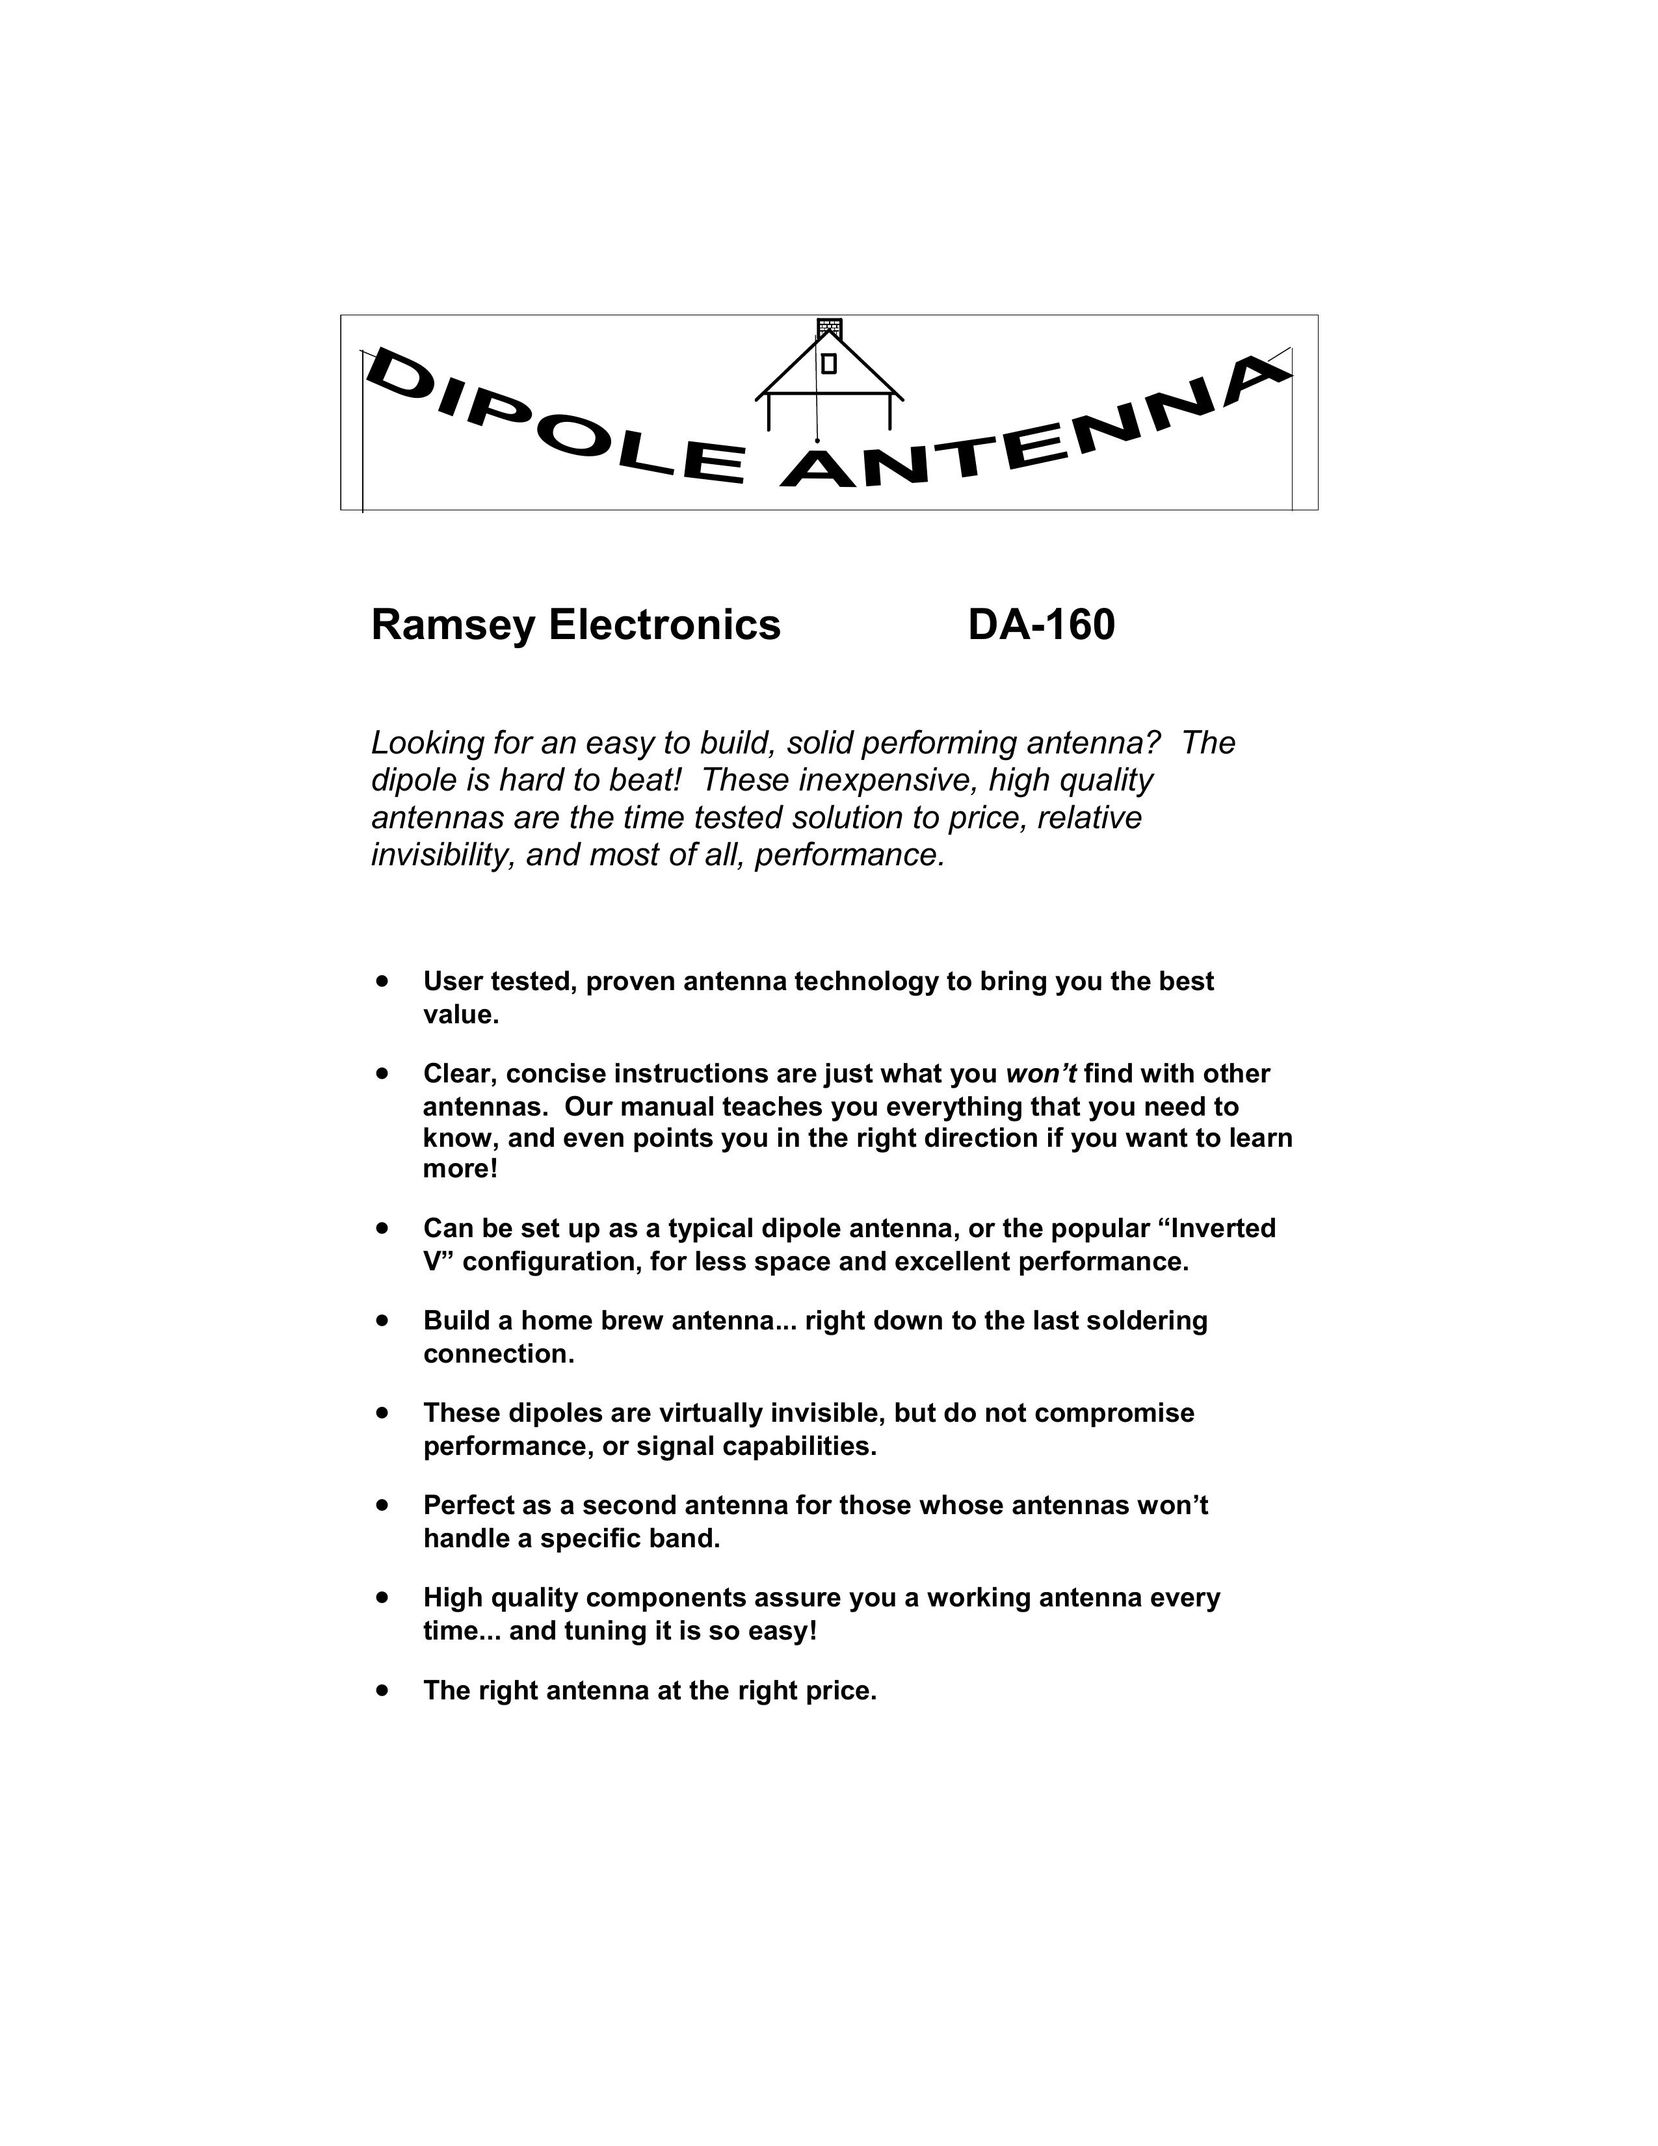 Ramsey Electronics DA-160 Radio Antenna User Manual